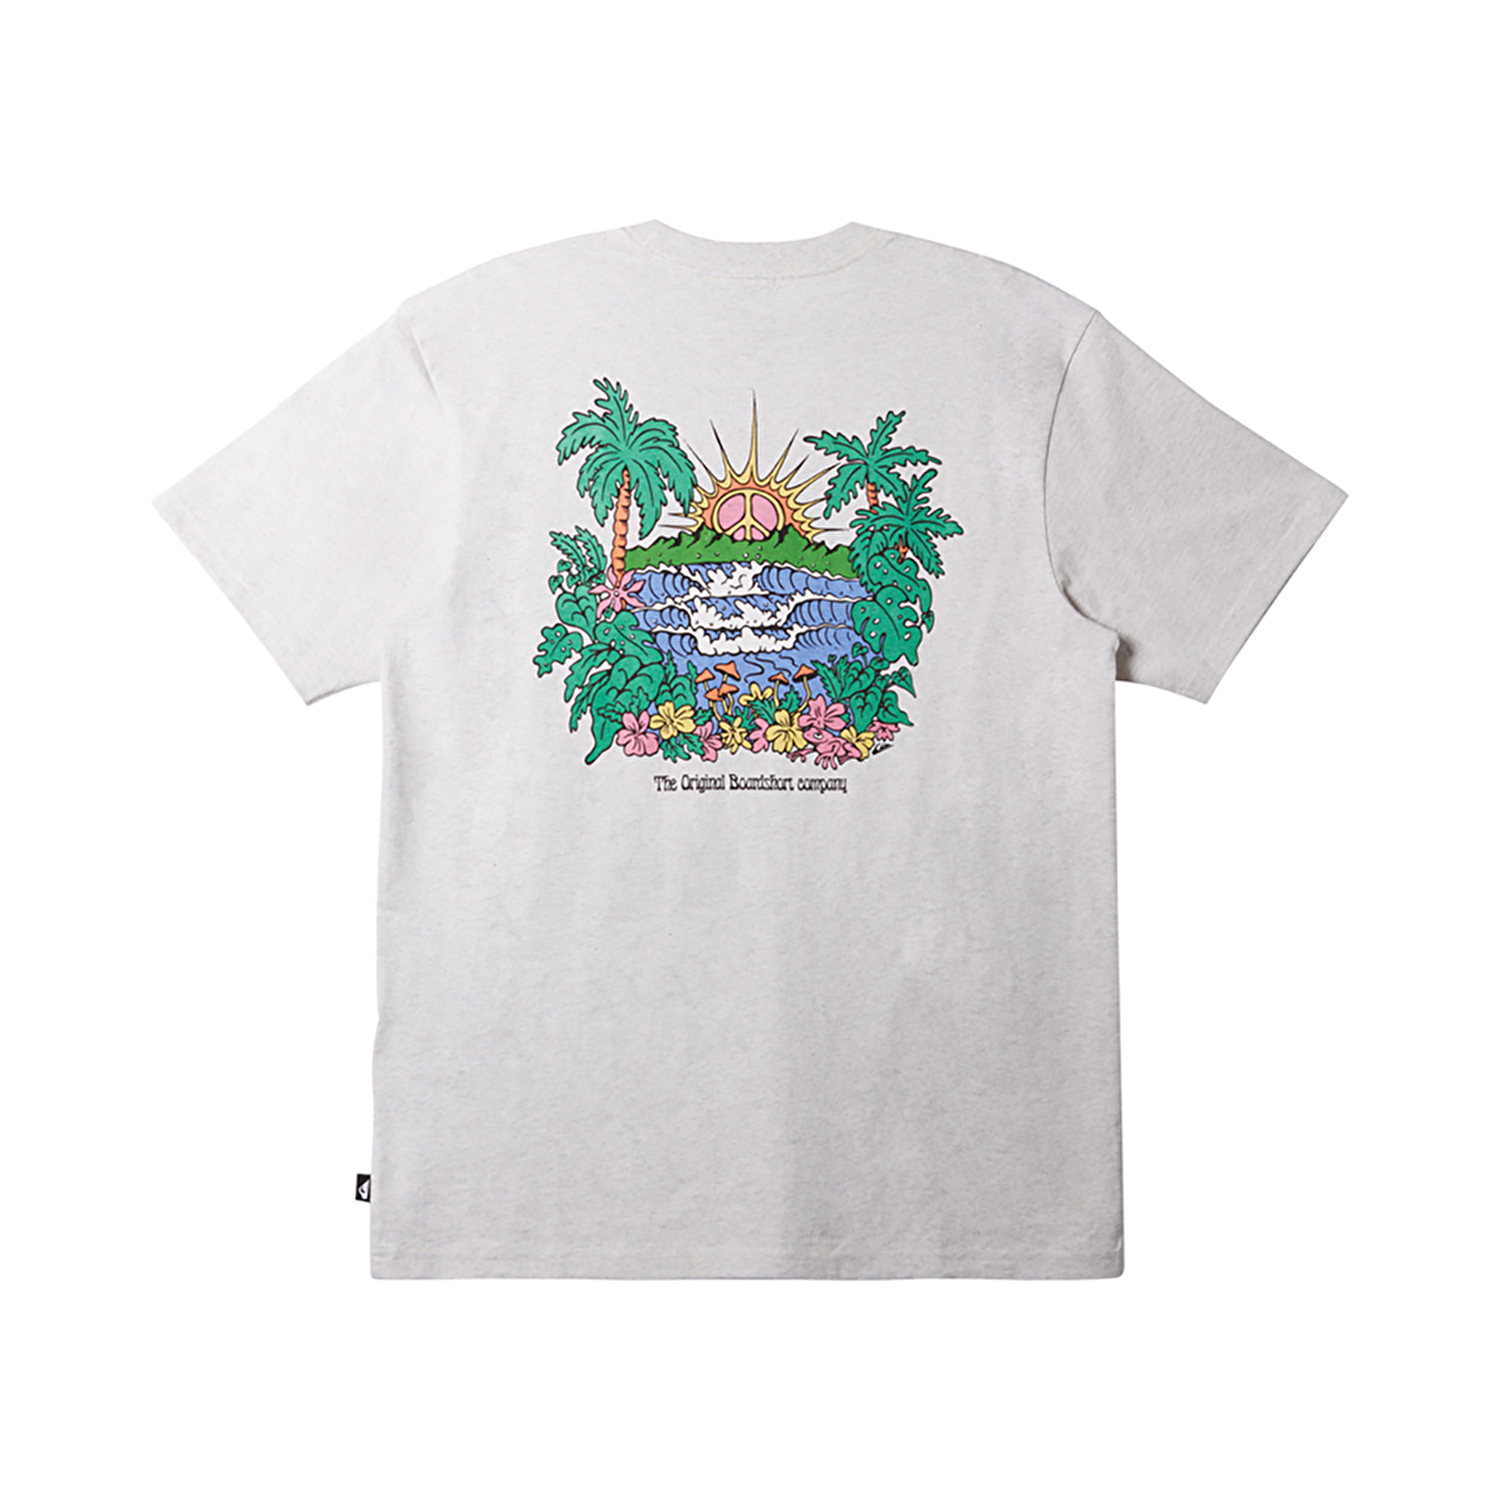 Quiksilver Island Sunrise Moe Erkek Kısa Kollu T-Shirt